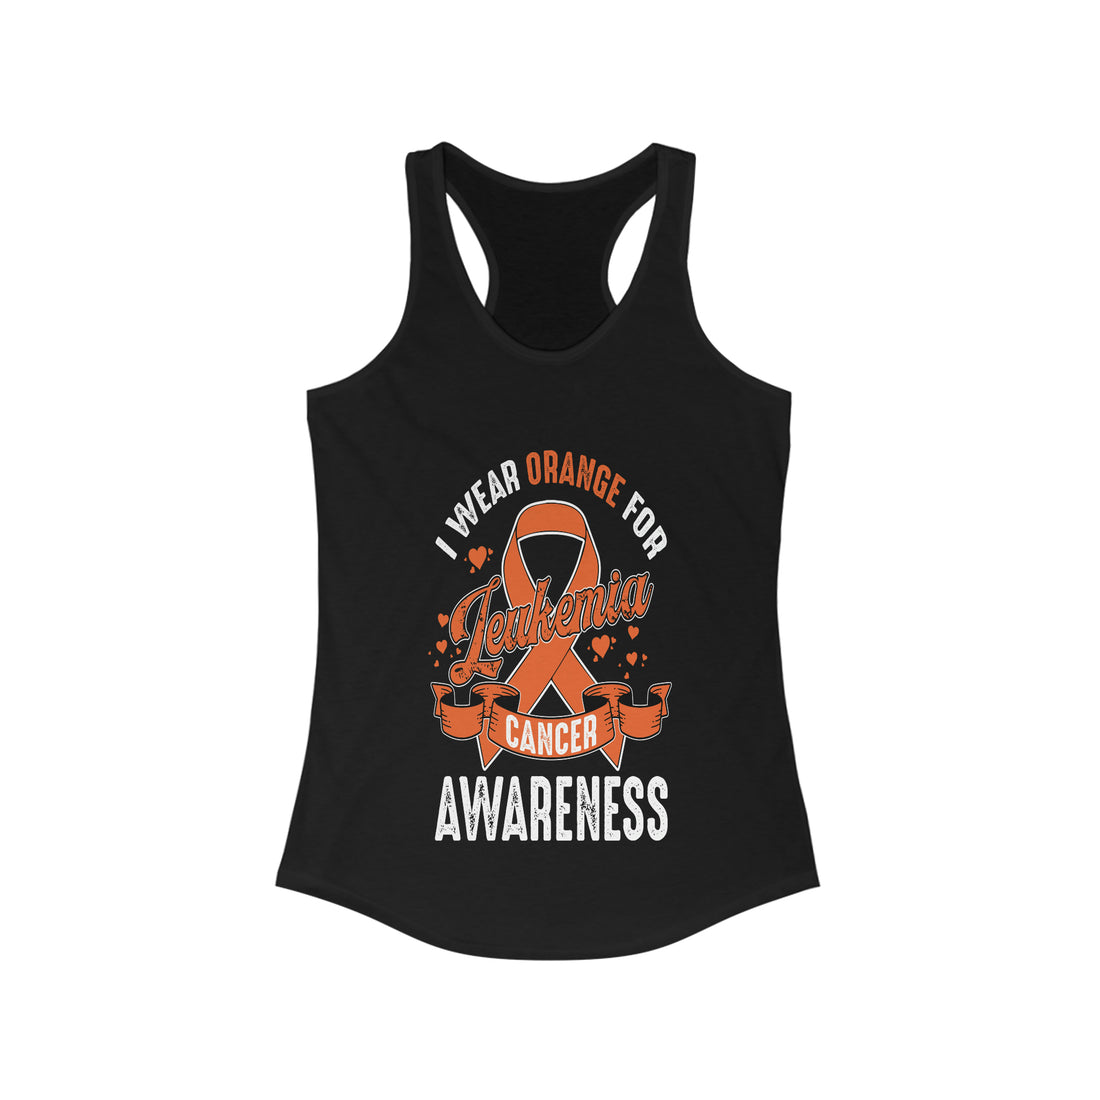 I Wear Orange For Leukemia Cancer Awareness - Racerback Tank Top